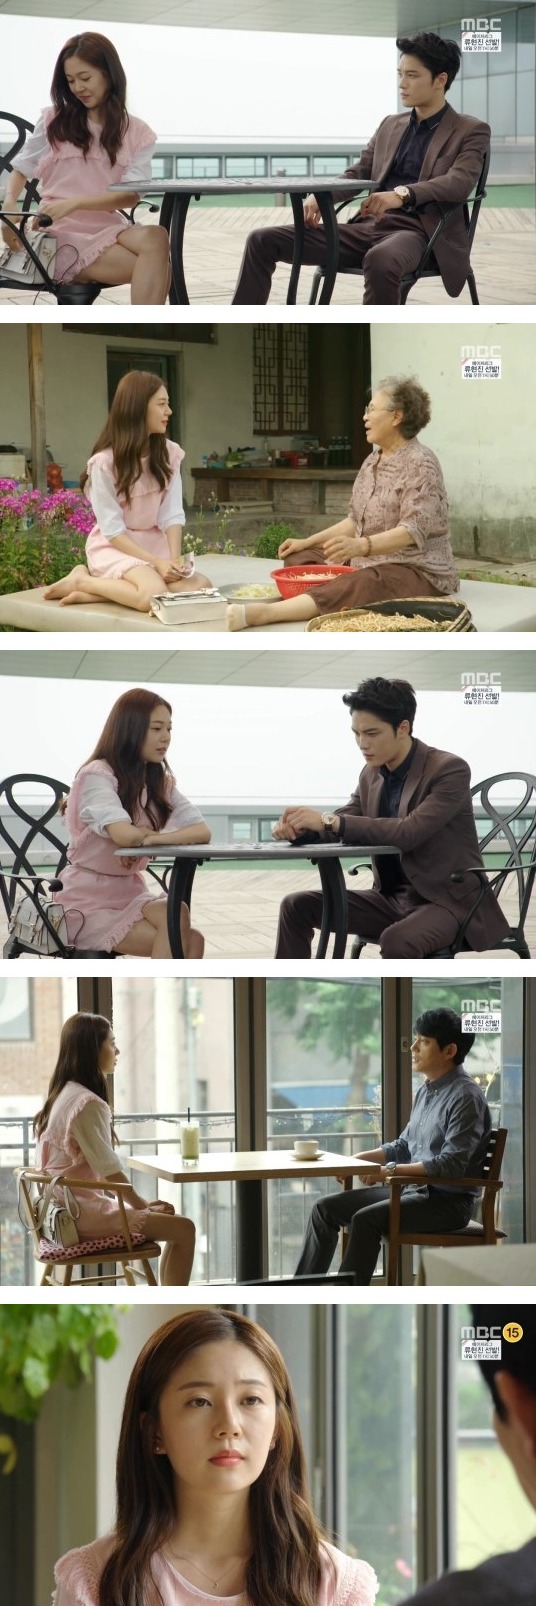 episode 23 captures for the Korean drama 'Triangle - Drama'